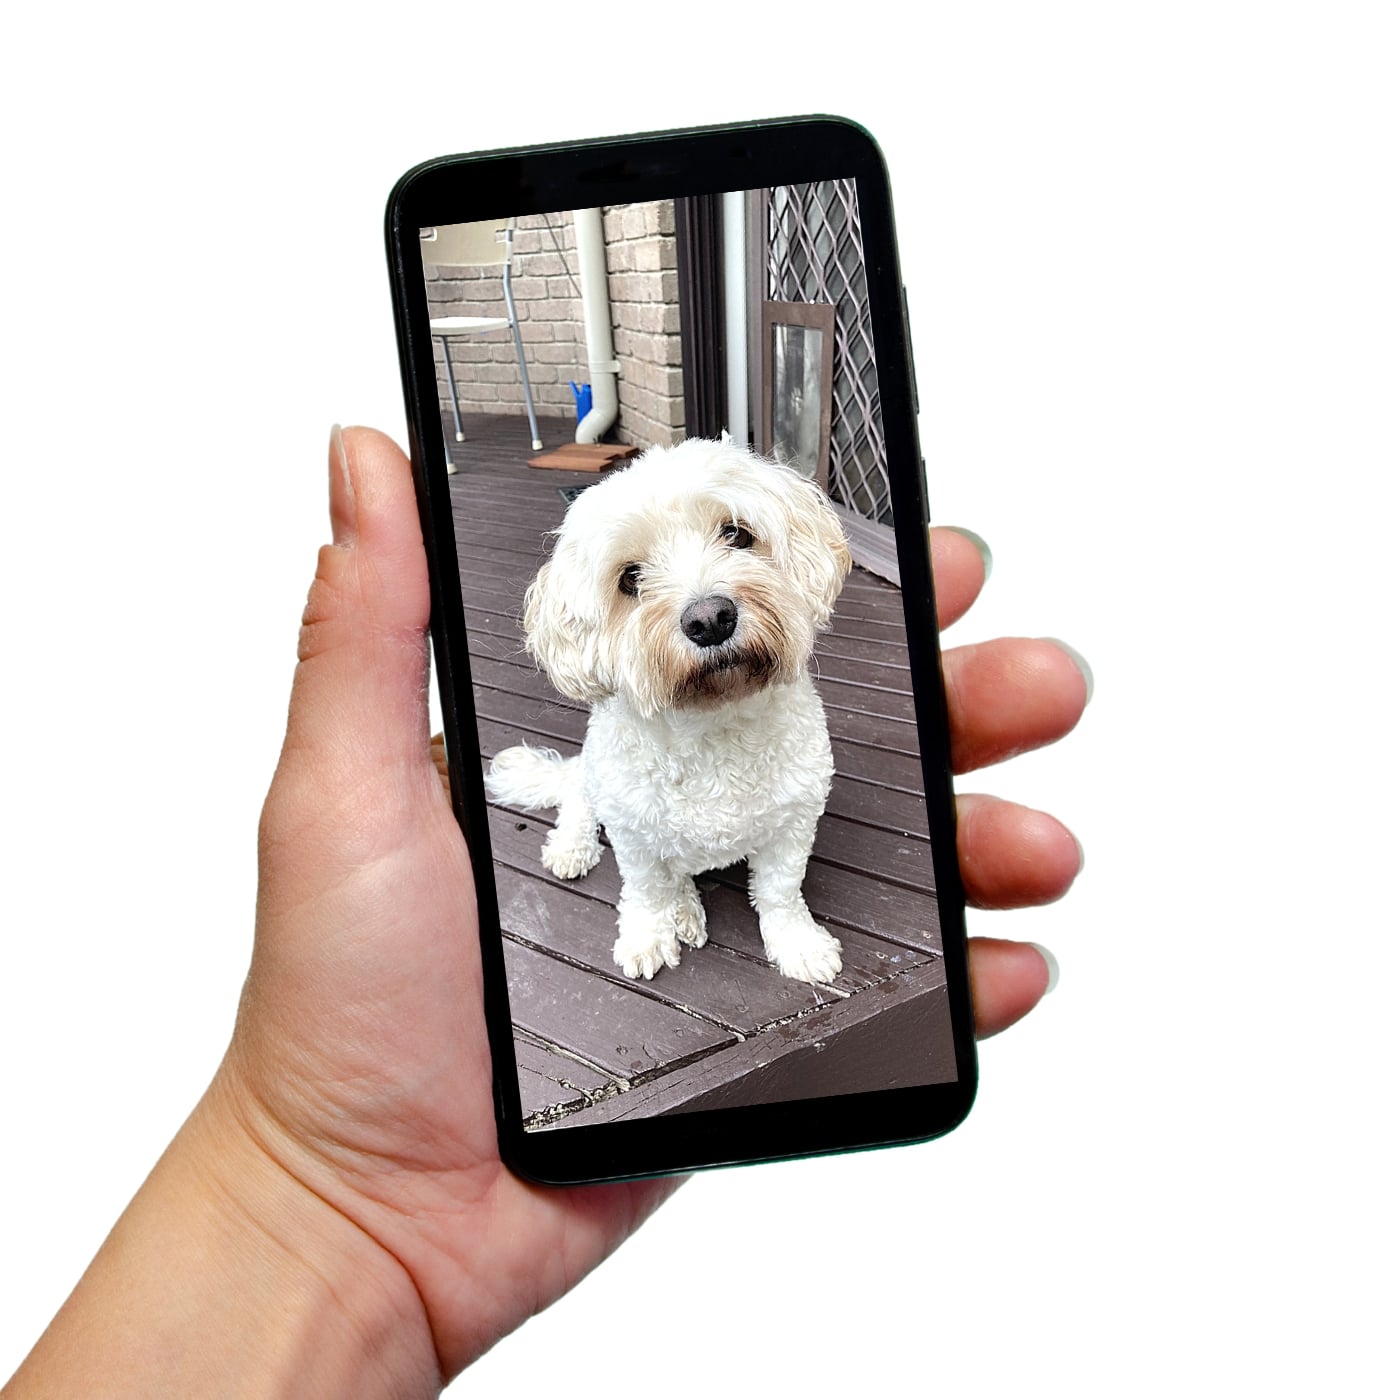 upload your pet photo